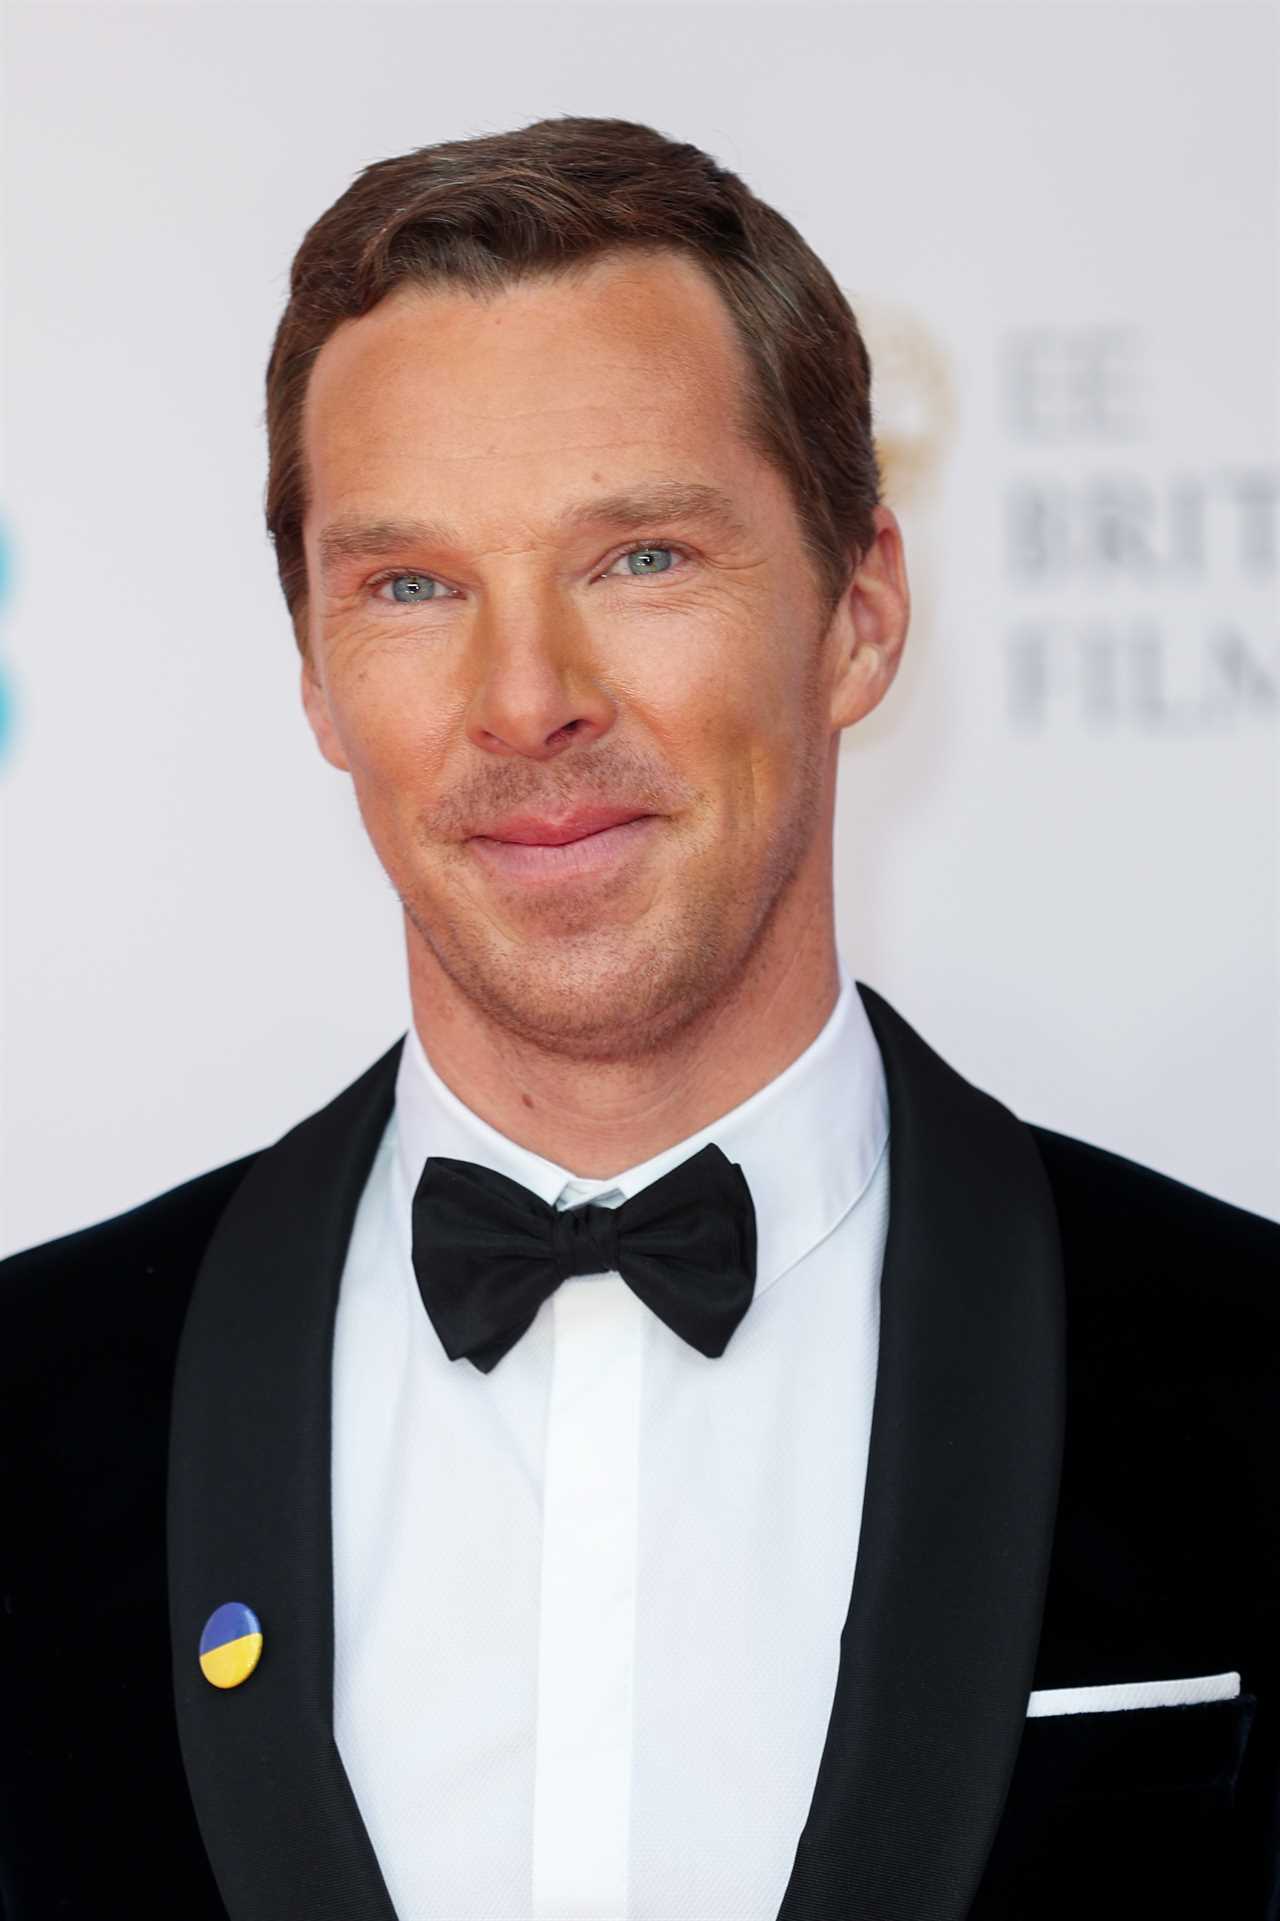 Benedict Cumberbatch faces compensation claim over slave-owning ancestors